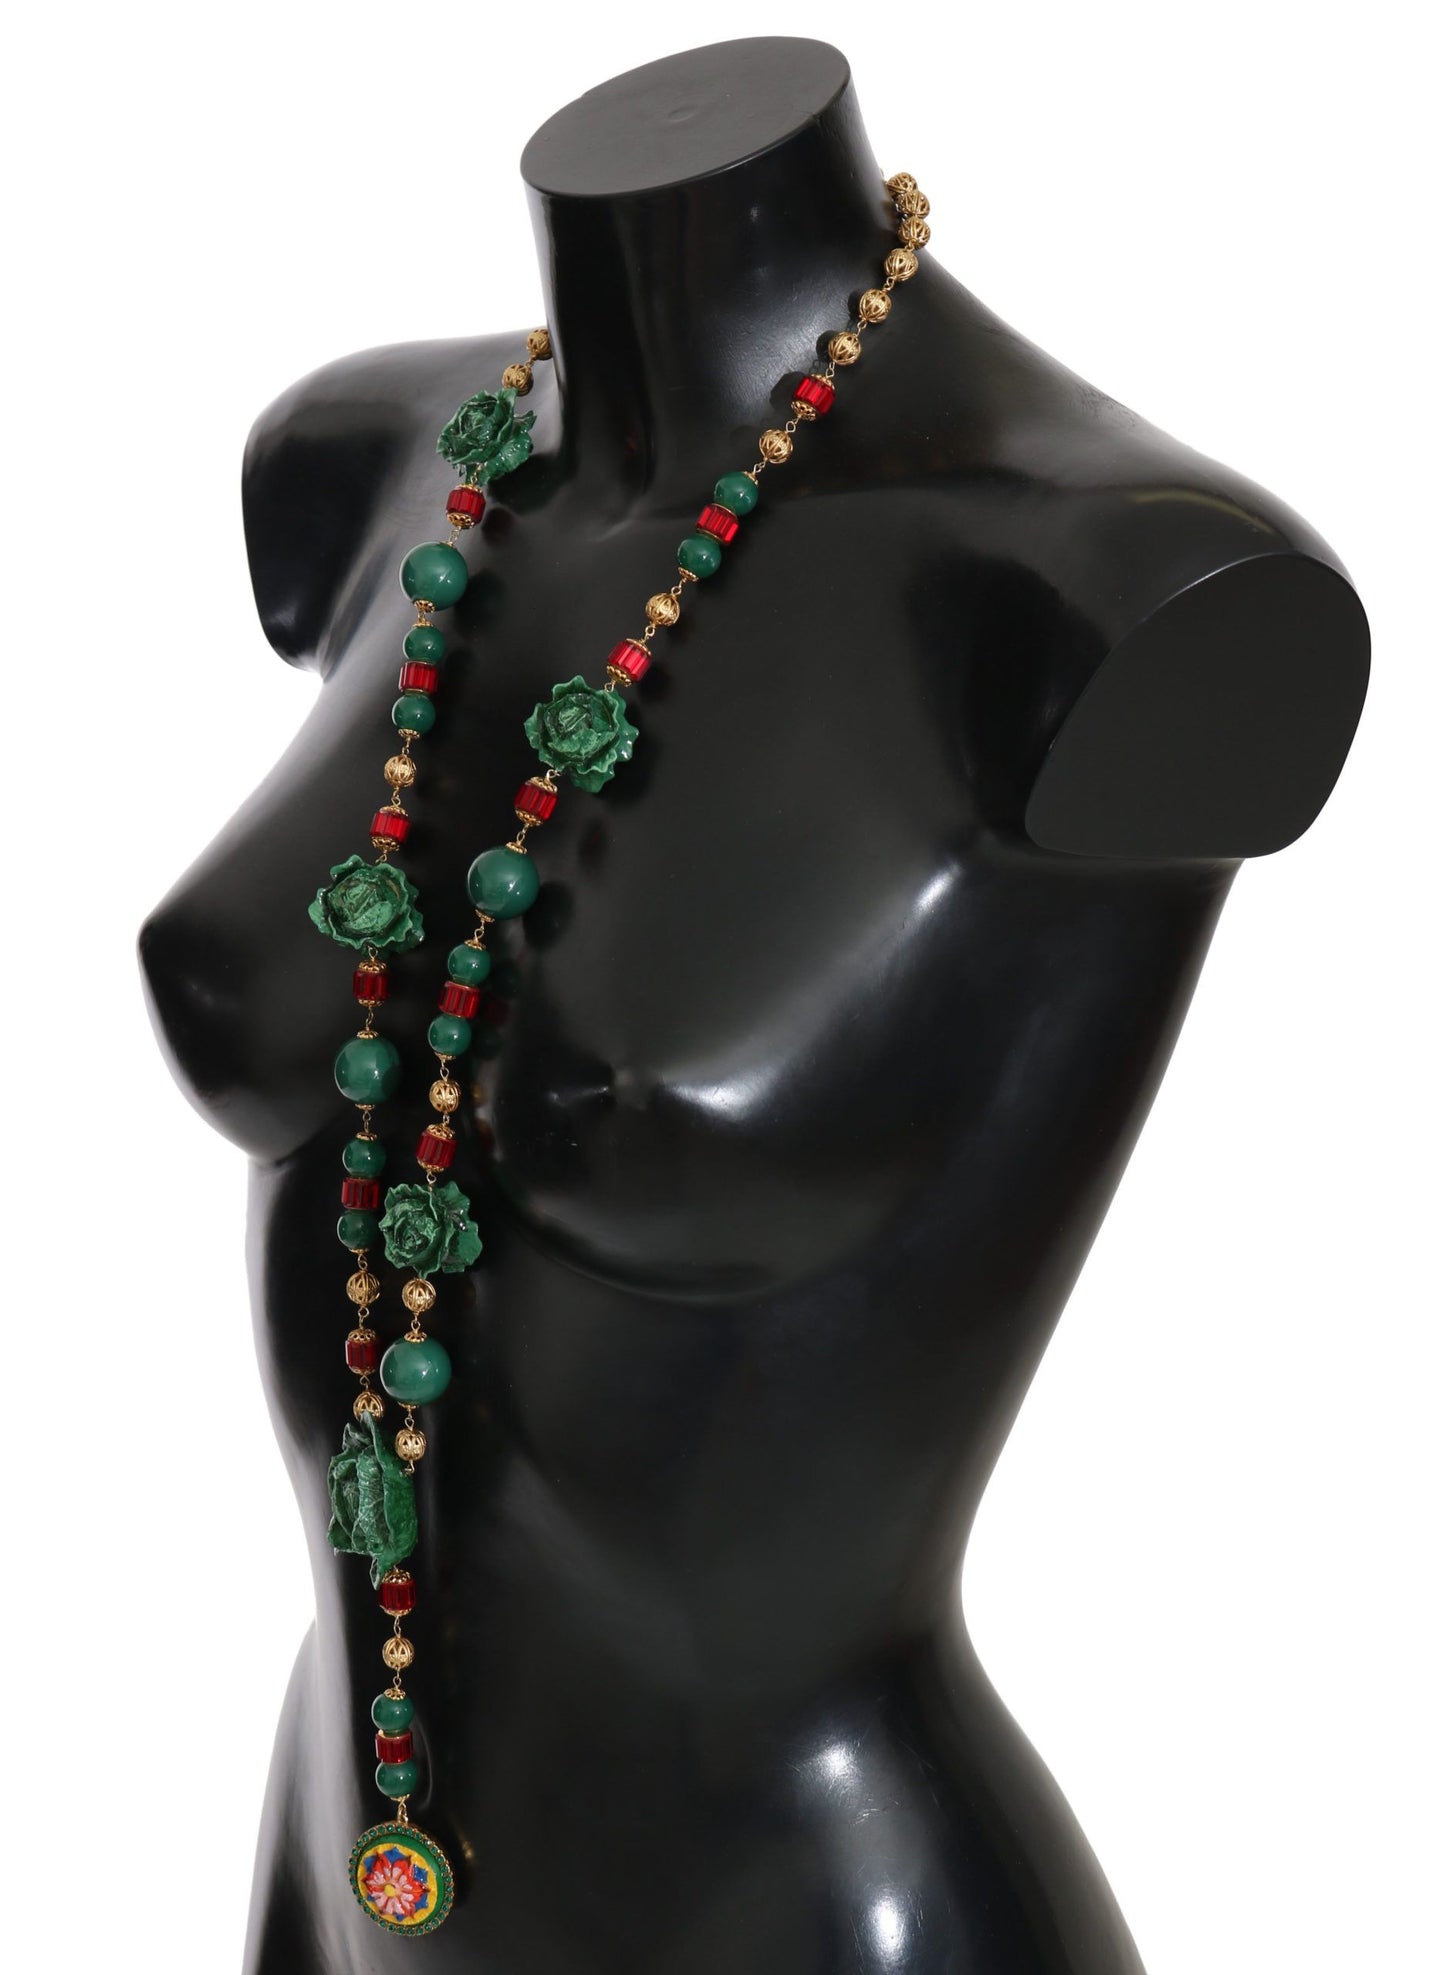 Exquisite Sicilian Opera Chain Necklace